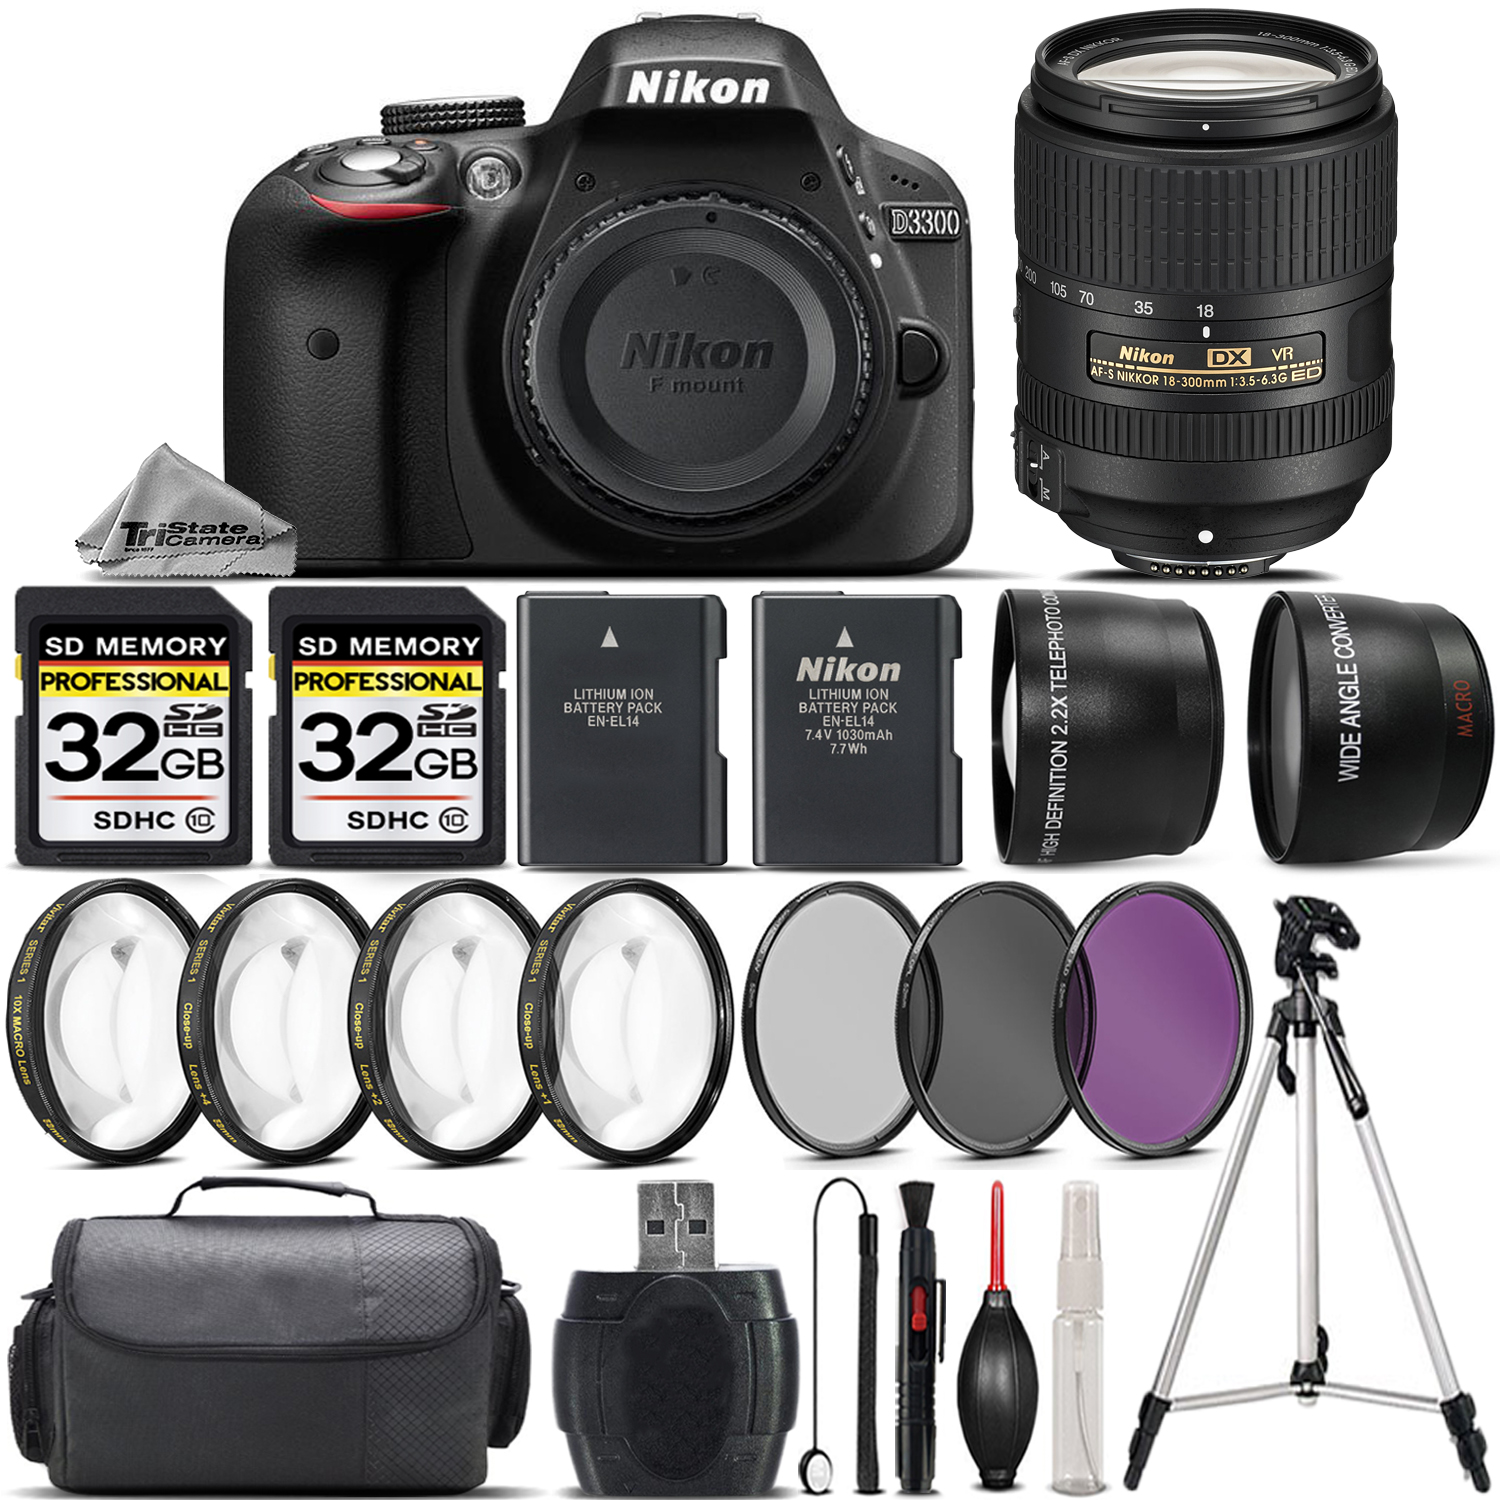 D3300 DSLR Camera with Nikon 18-300 VR Lens + 0.43 FishEye Lens - 64GB Kit *FREE SHIPPING*